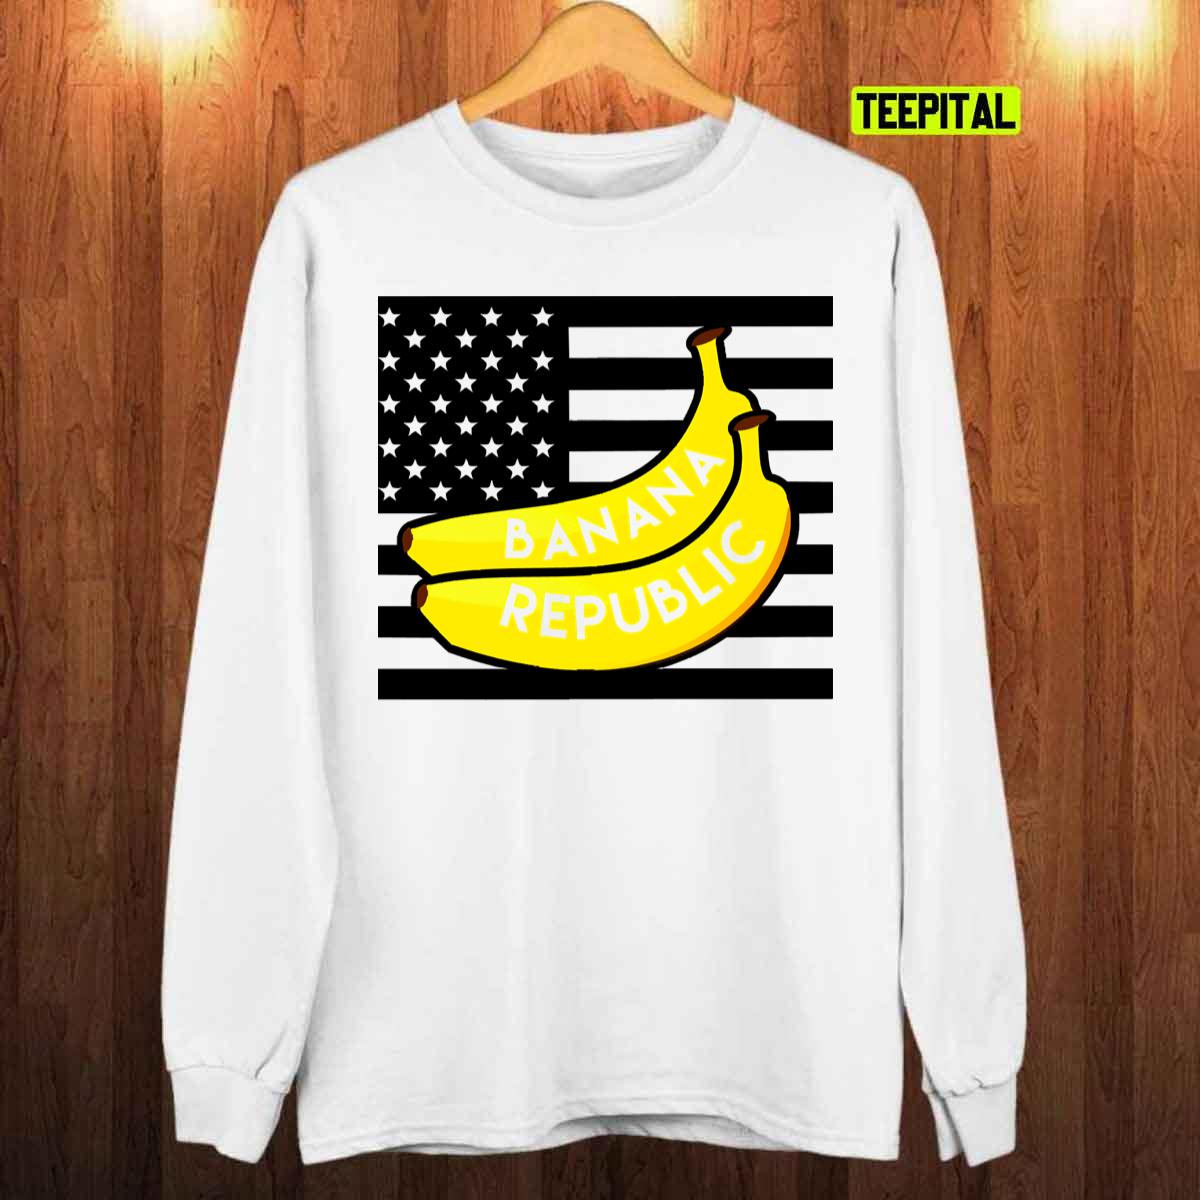 USA Banana Republican Capitol American Flag T-Shirt